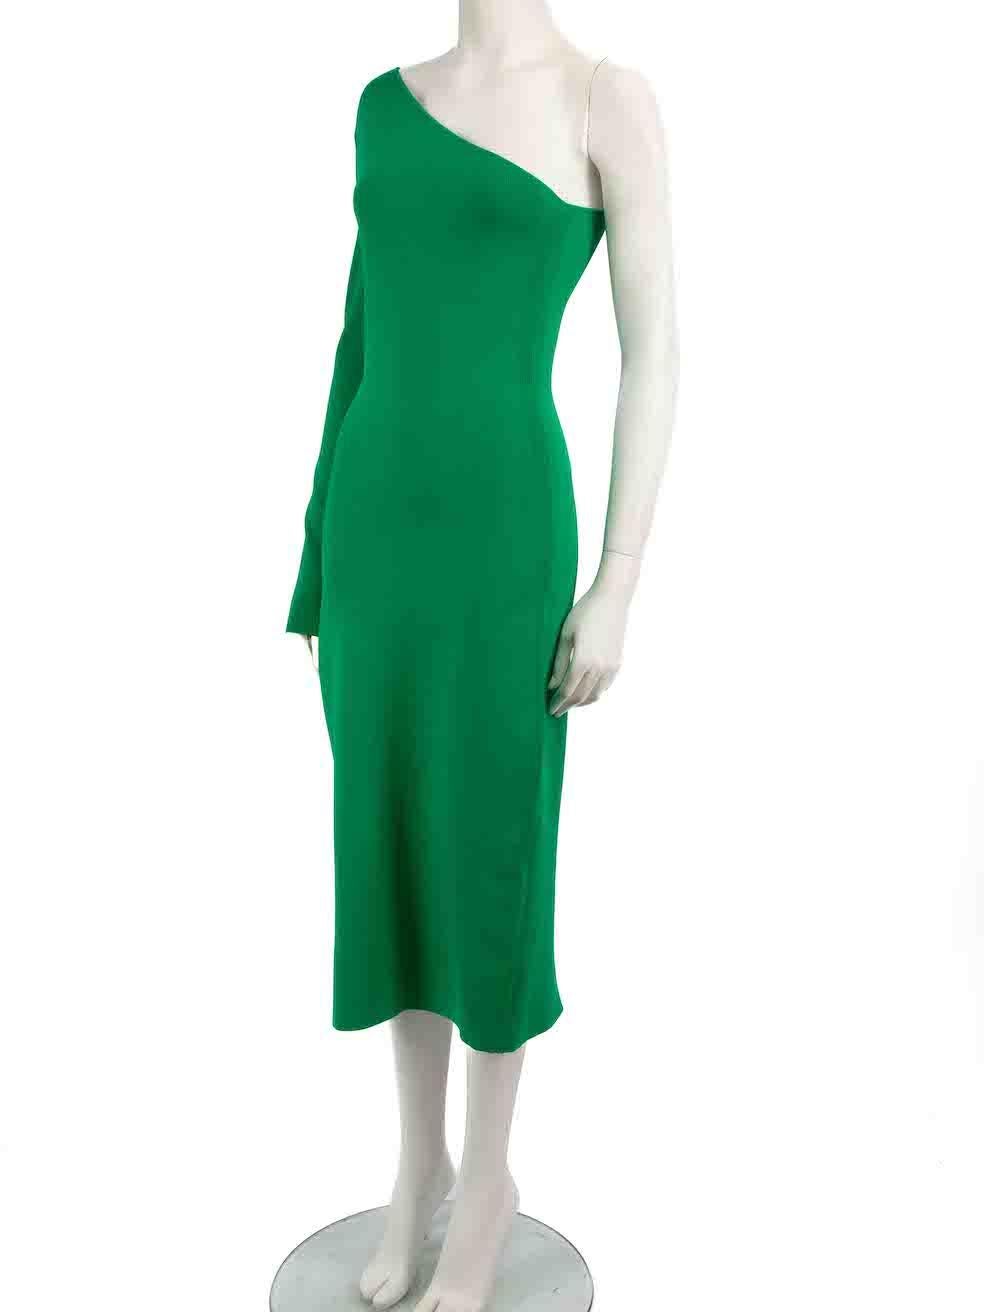 Women's Victoria Beckham VB Body Green One Shoulder Bodycon Dress Size L